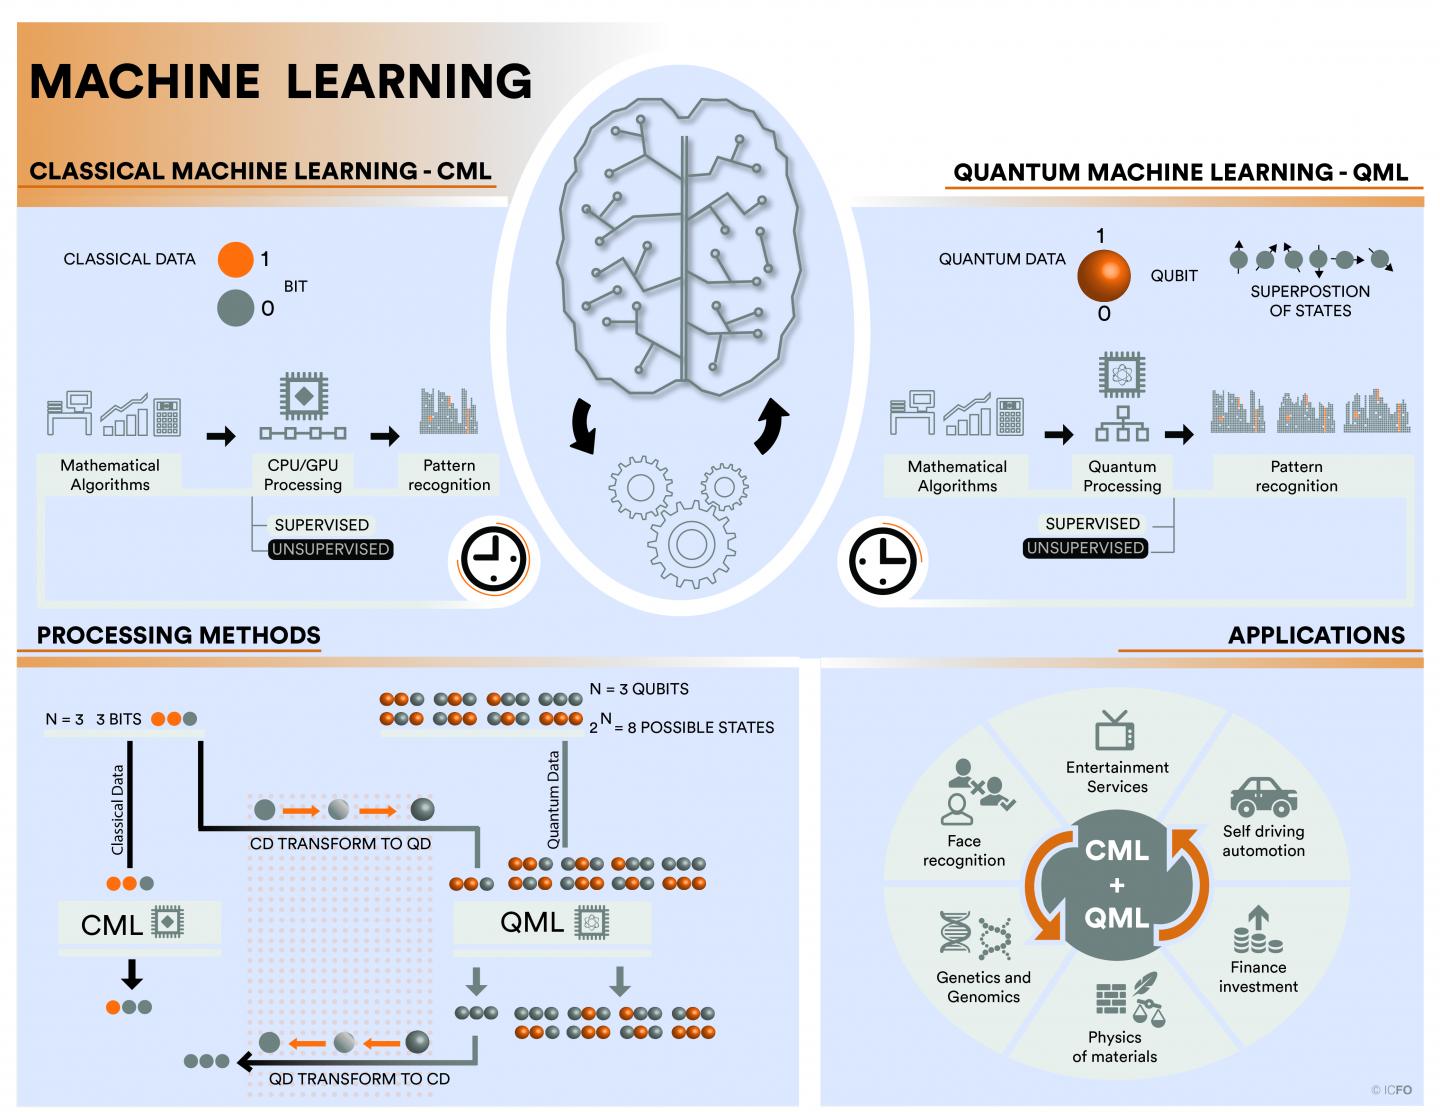 Quantum Machined Learning vs. Classical Machine Learning